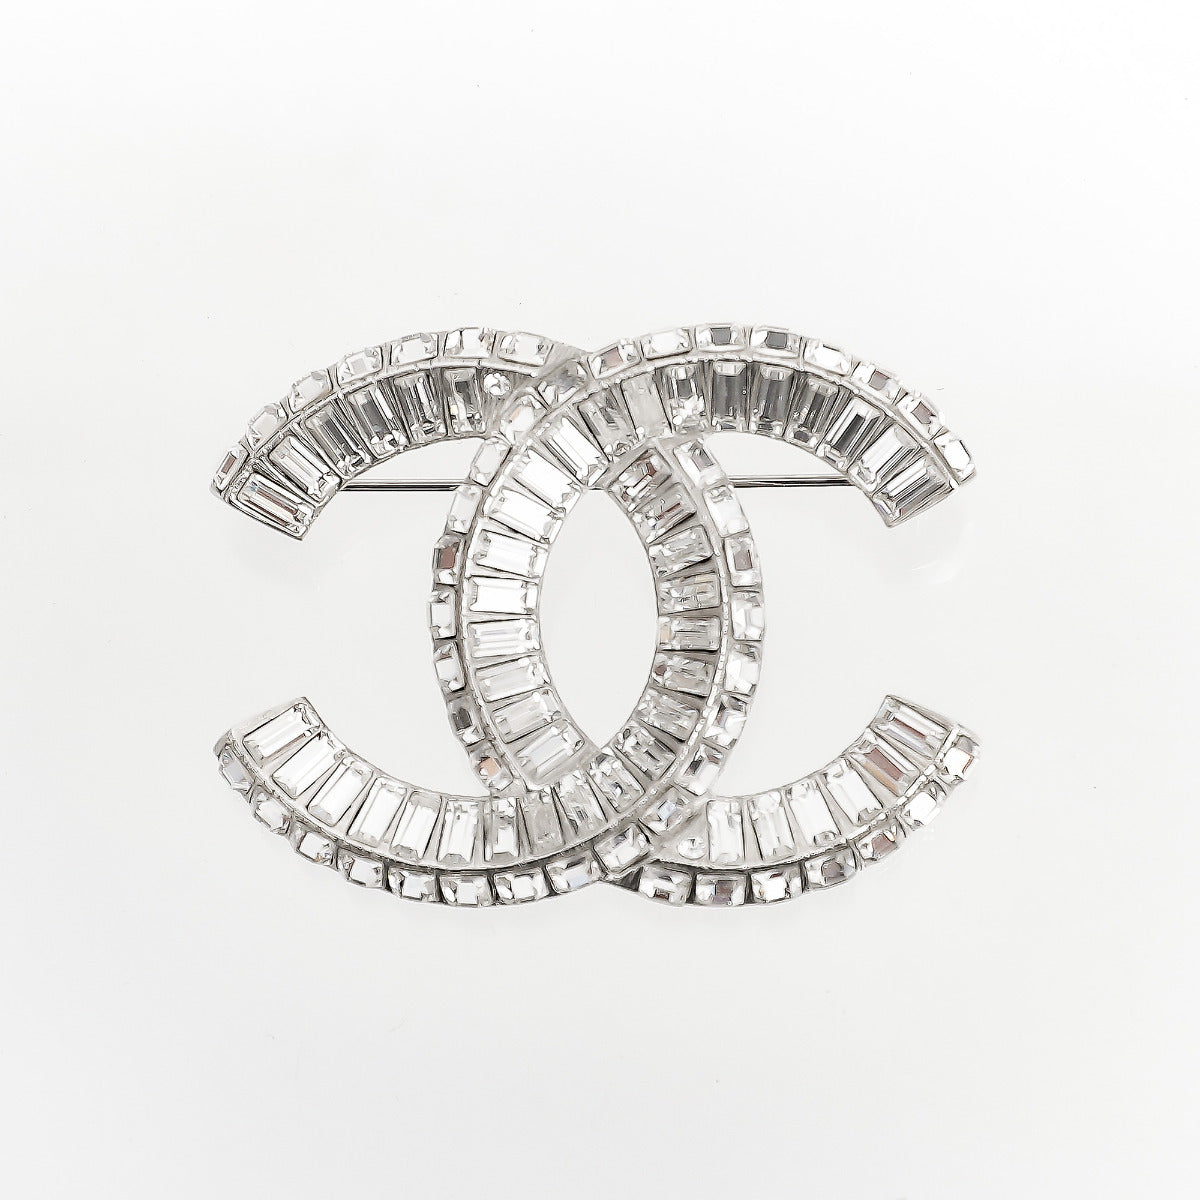 Cc pin & brooche Chanel Silver in Metal - 36586949